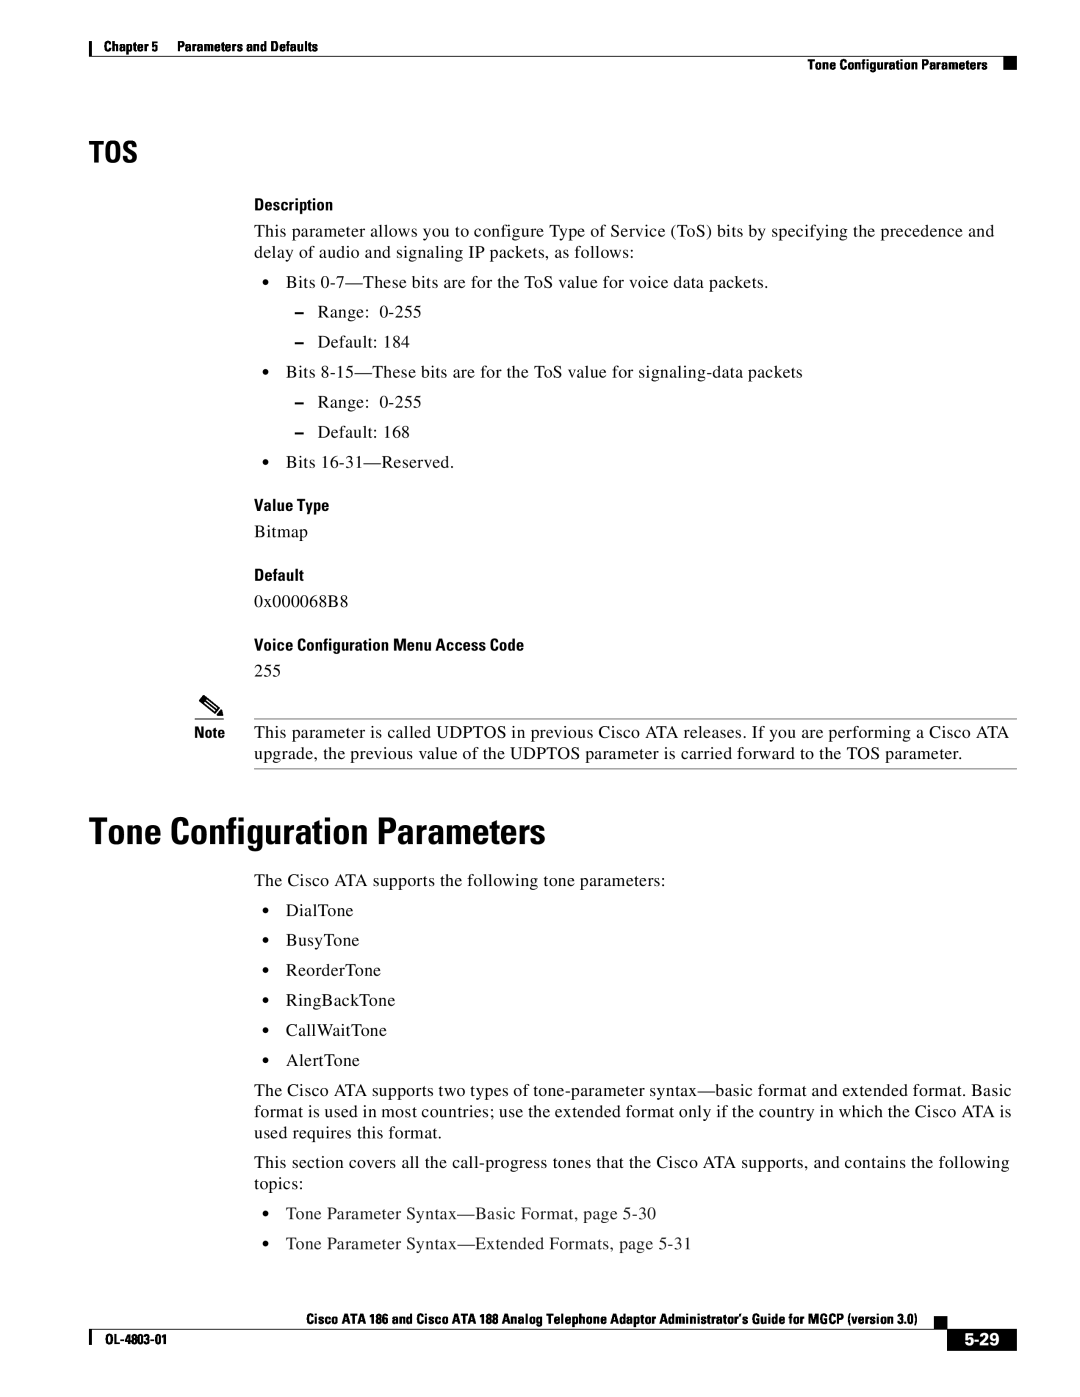 Cisco Systems ATA 186 Tone Configuration Parameters, Tone Parameter Syntax-Basic Format, page, 5-29, Description, Default 